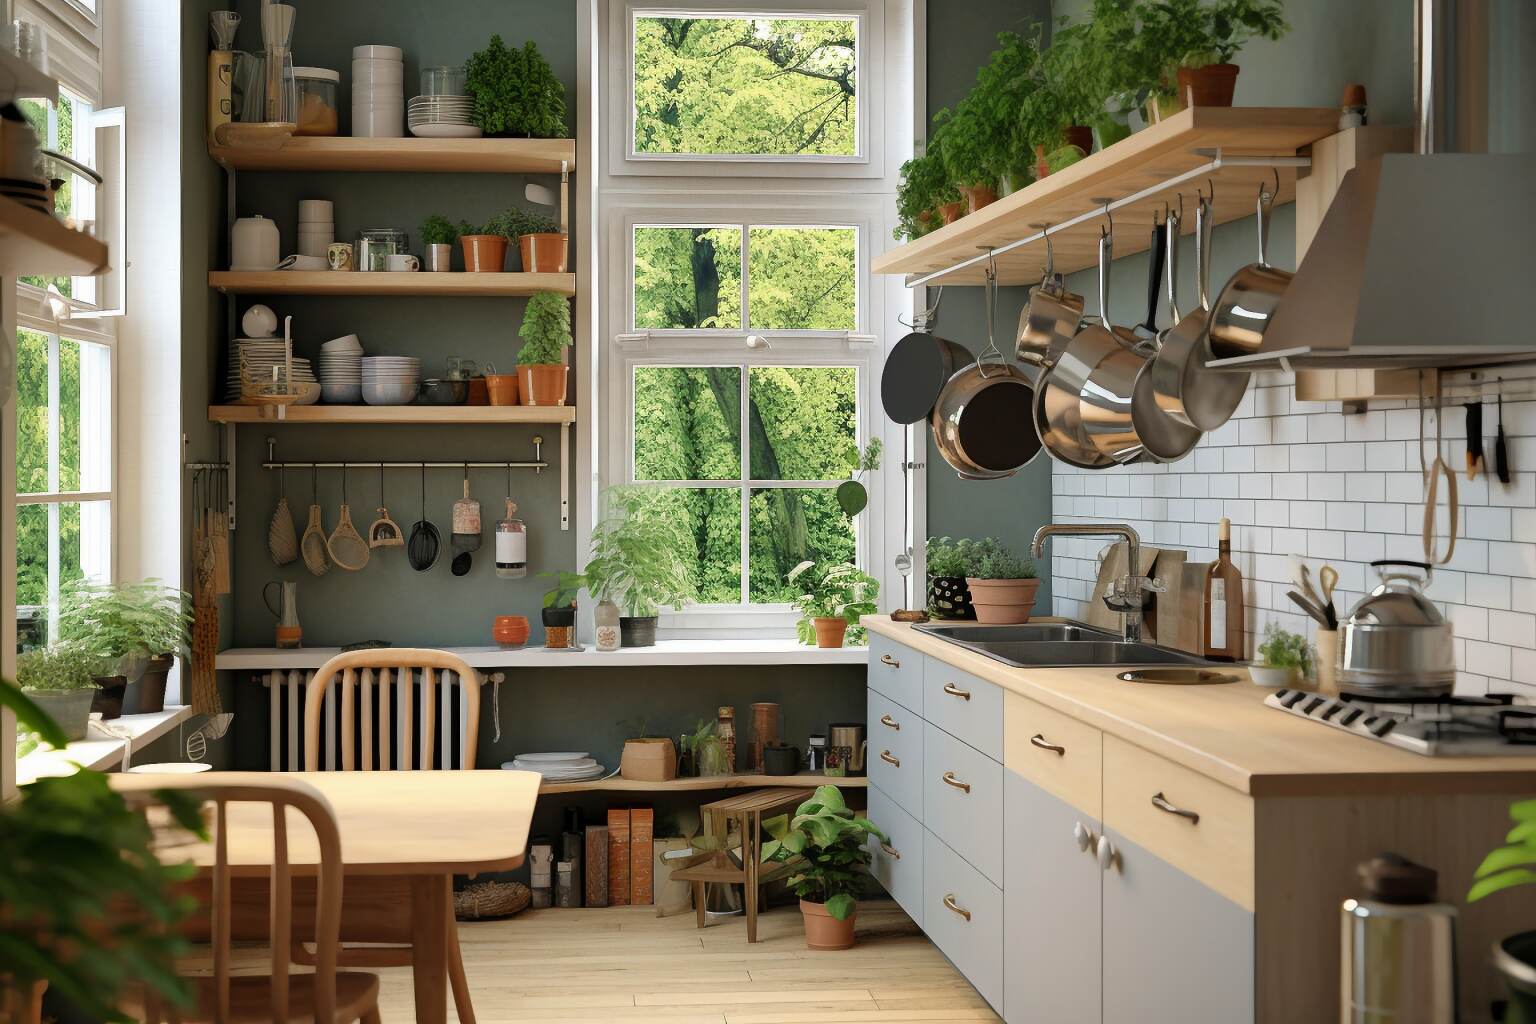 Snapshot Of A Scandinavian Style Kitchen With Indoor Plants